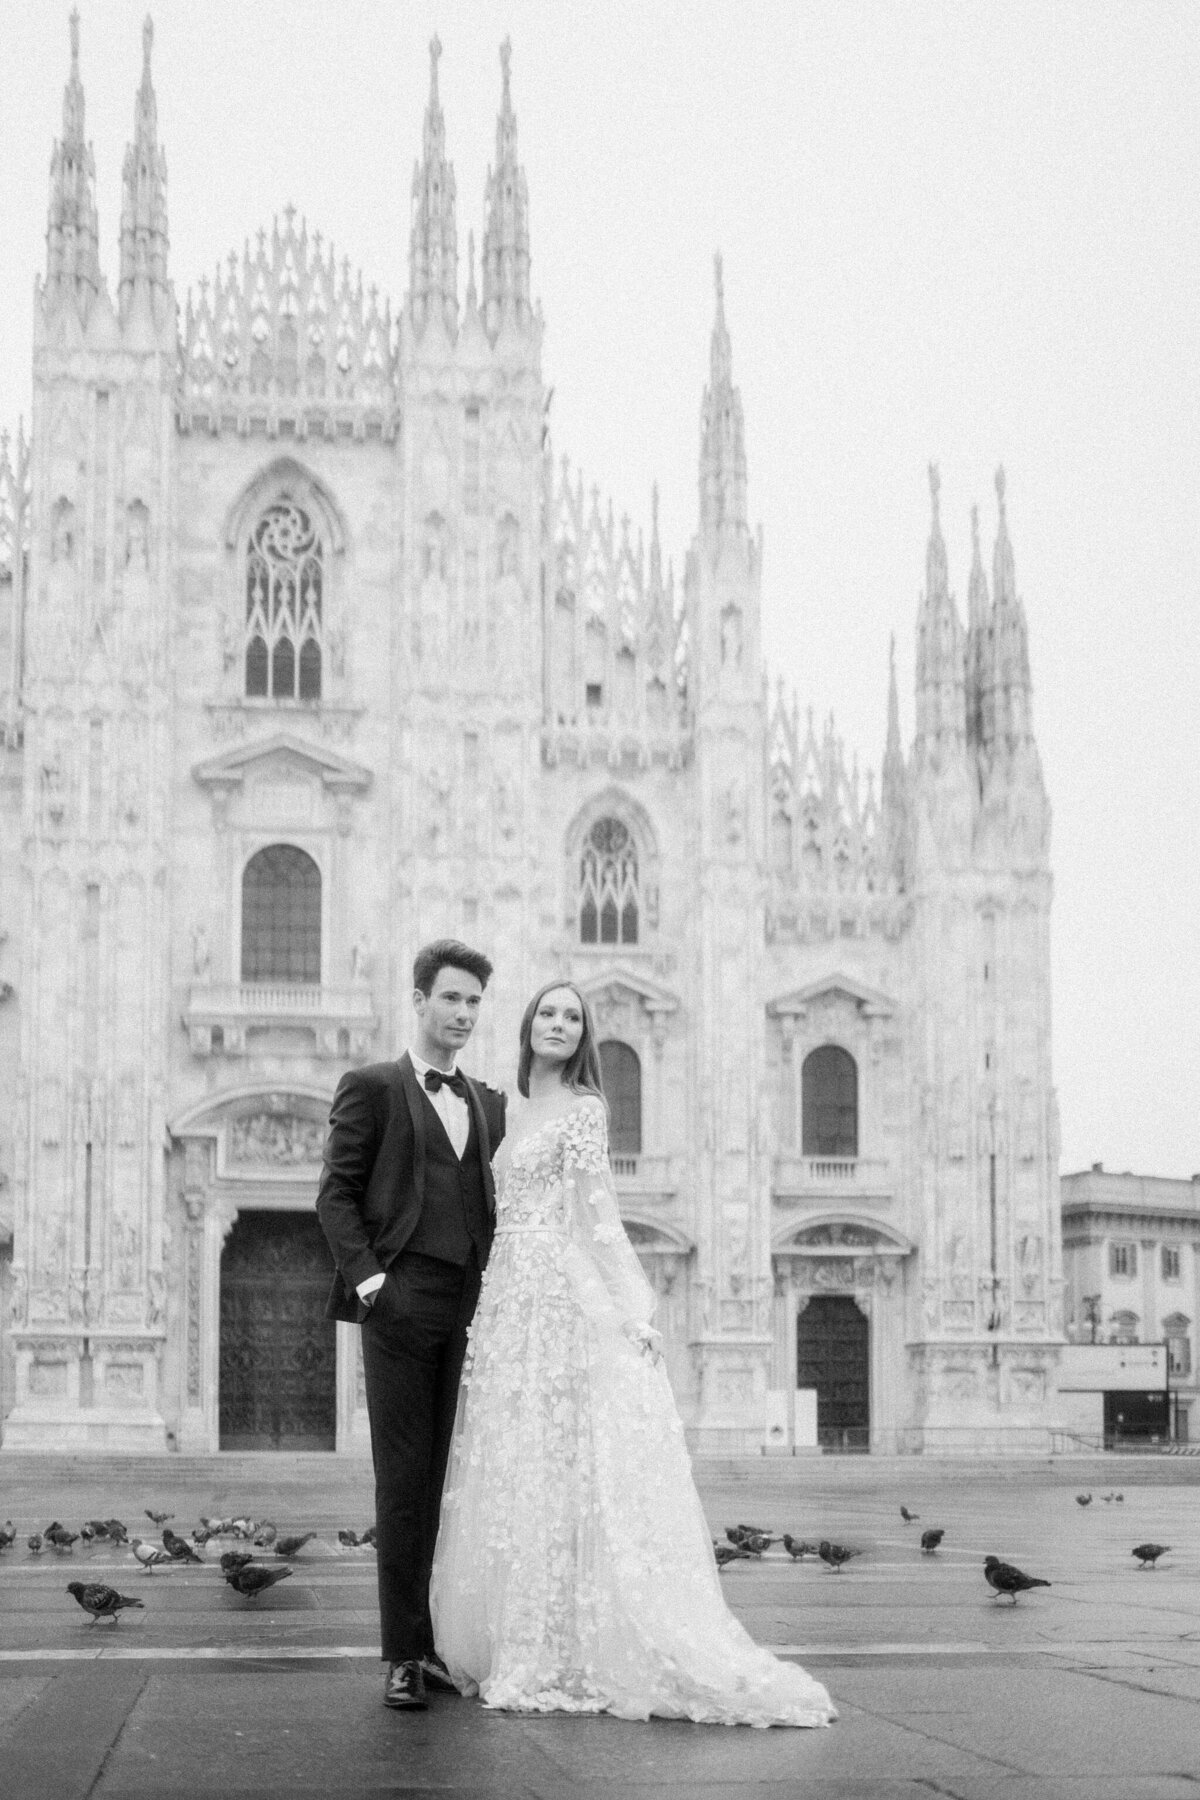 014-Milan-Duomo-Inspiration-Love-Story Elopement-Cinematic-Romance-Destination-Wedding-Editorial-Luxury-Fine-Art-Lisa-Vigliotta-Photography